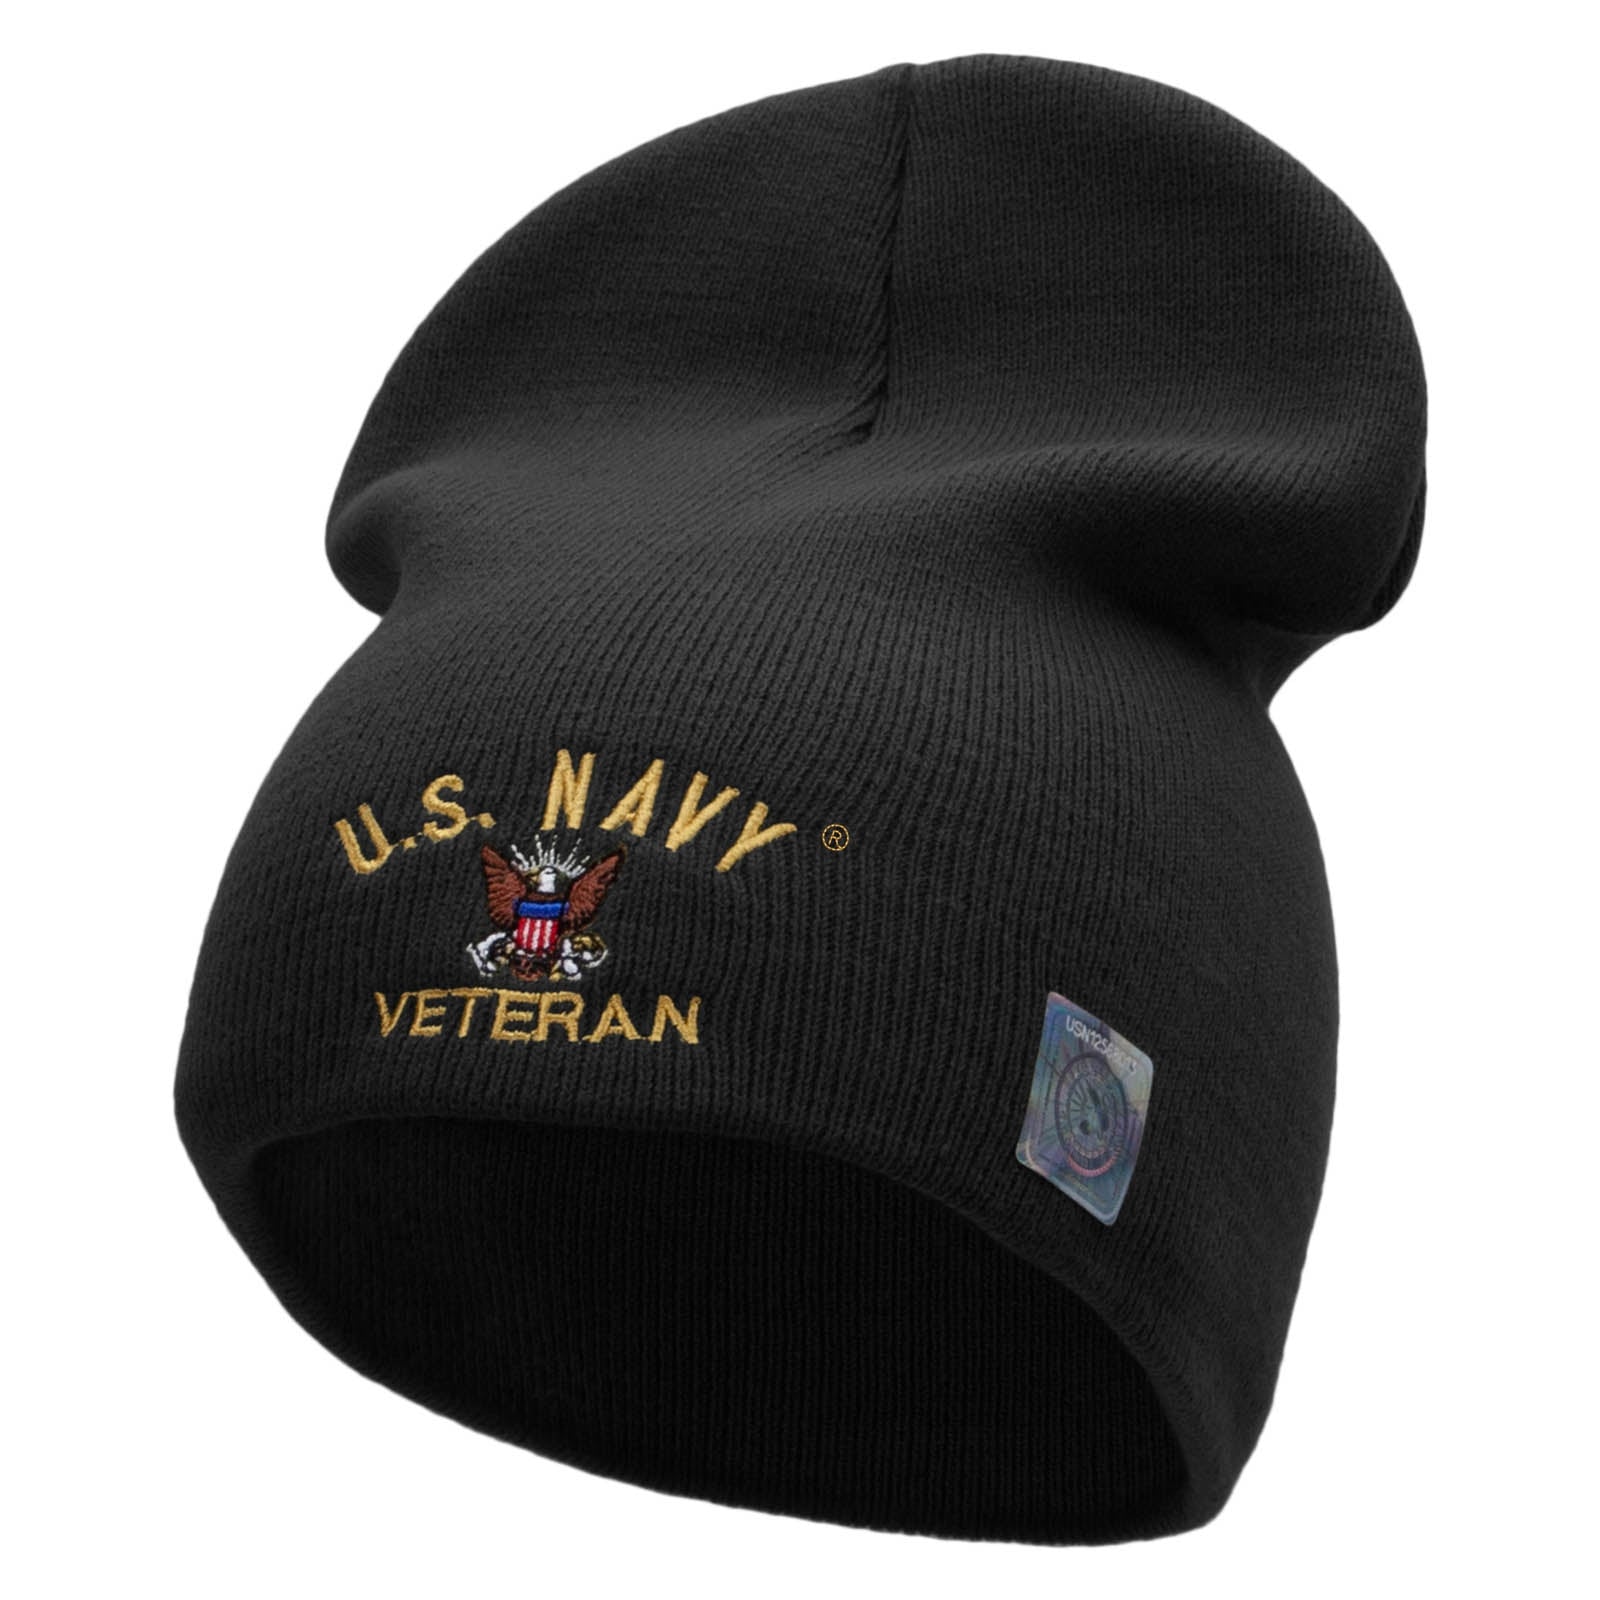 Licensed US Navy Veteran Embroidered Short Beanie Made in USA - Black OSFM